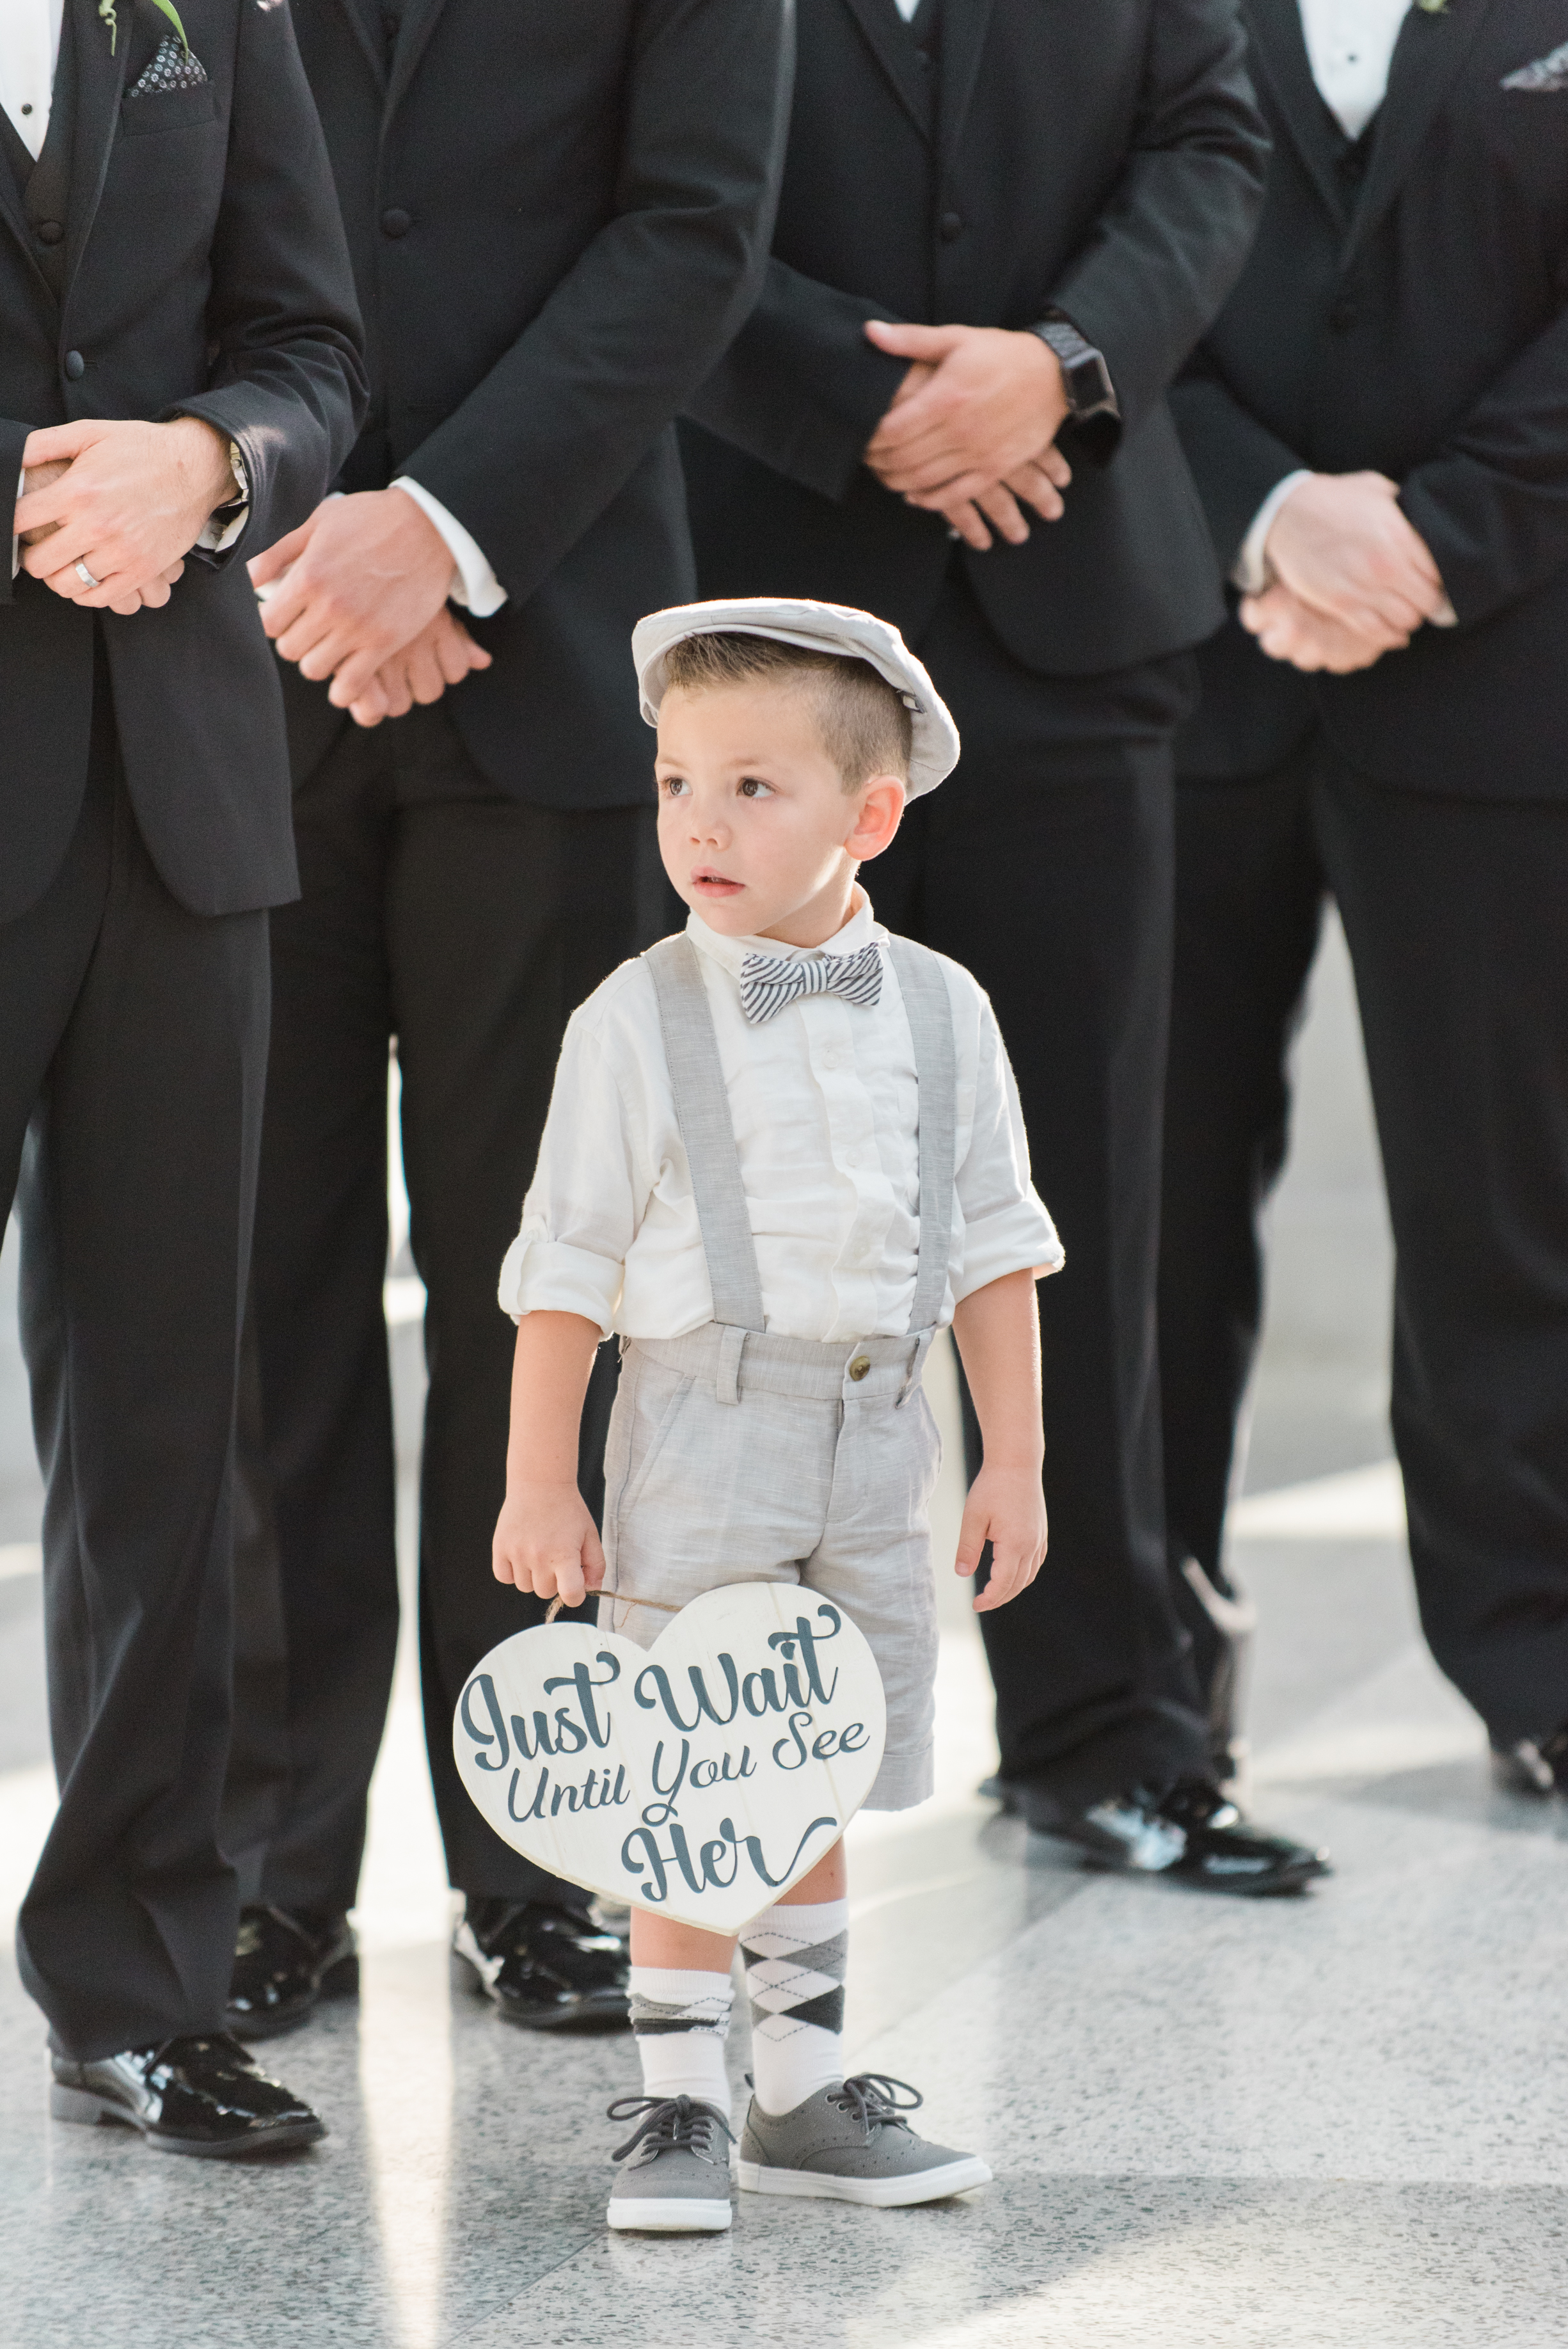 Cute Ring Bearer Outfits - Flagler Museum Palm Beach Wedding Ceremony - The Overwhelmed Bride Wedding Blog